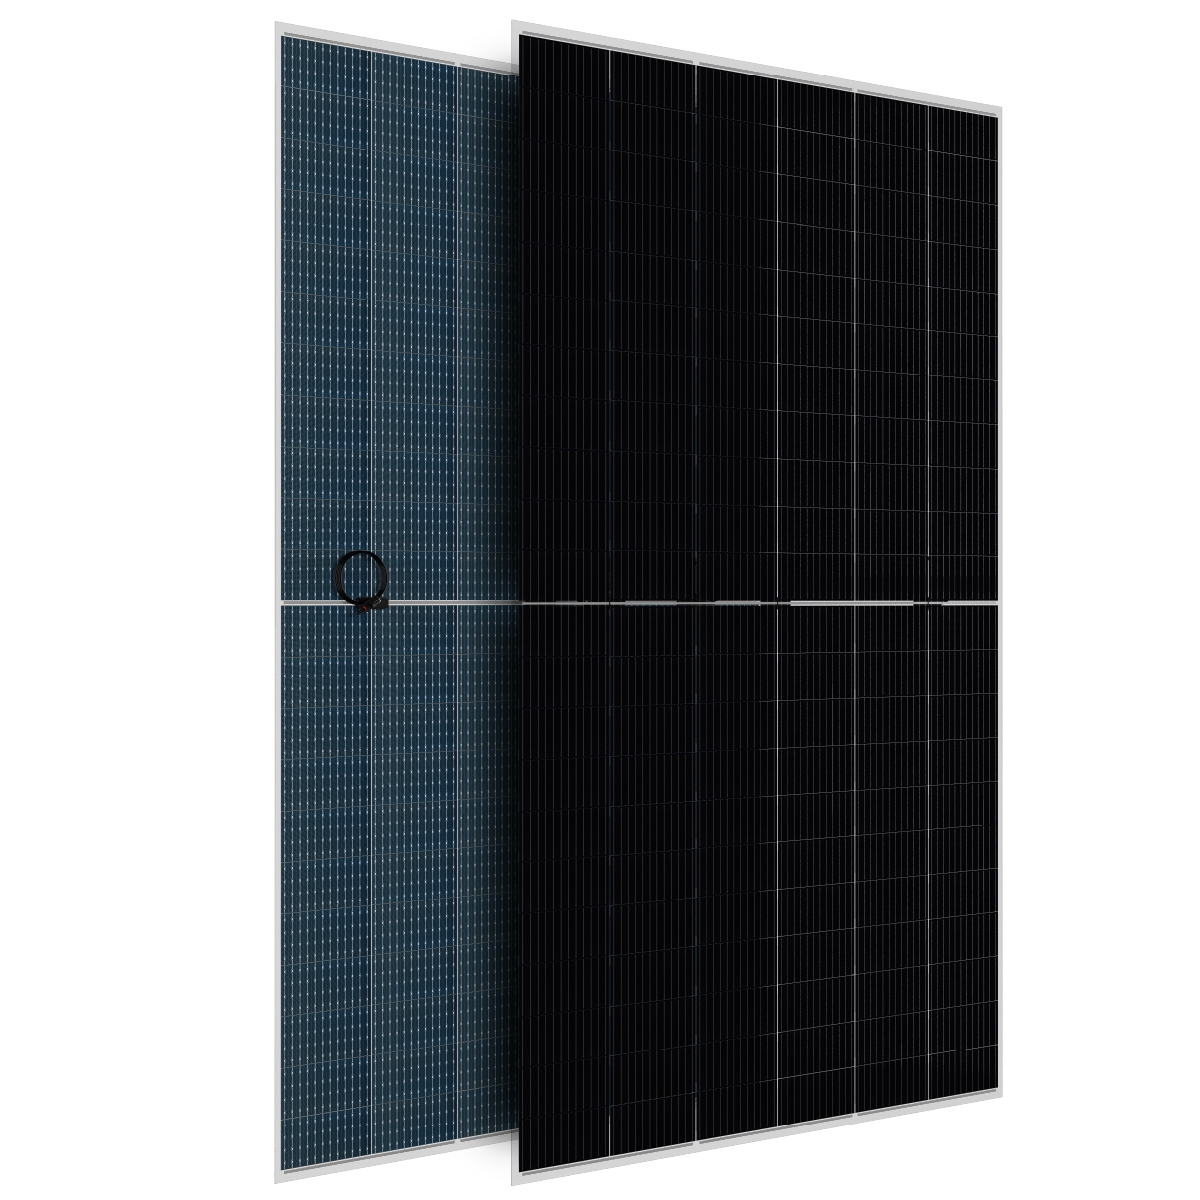 TommaTech 670Wp 132PMB M12 HC-MB G2G Solar Panel